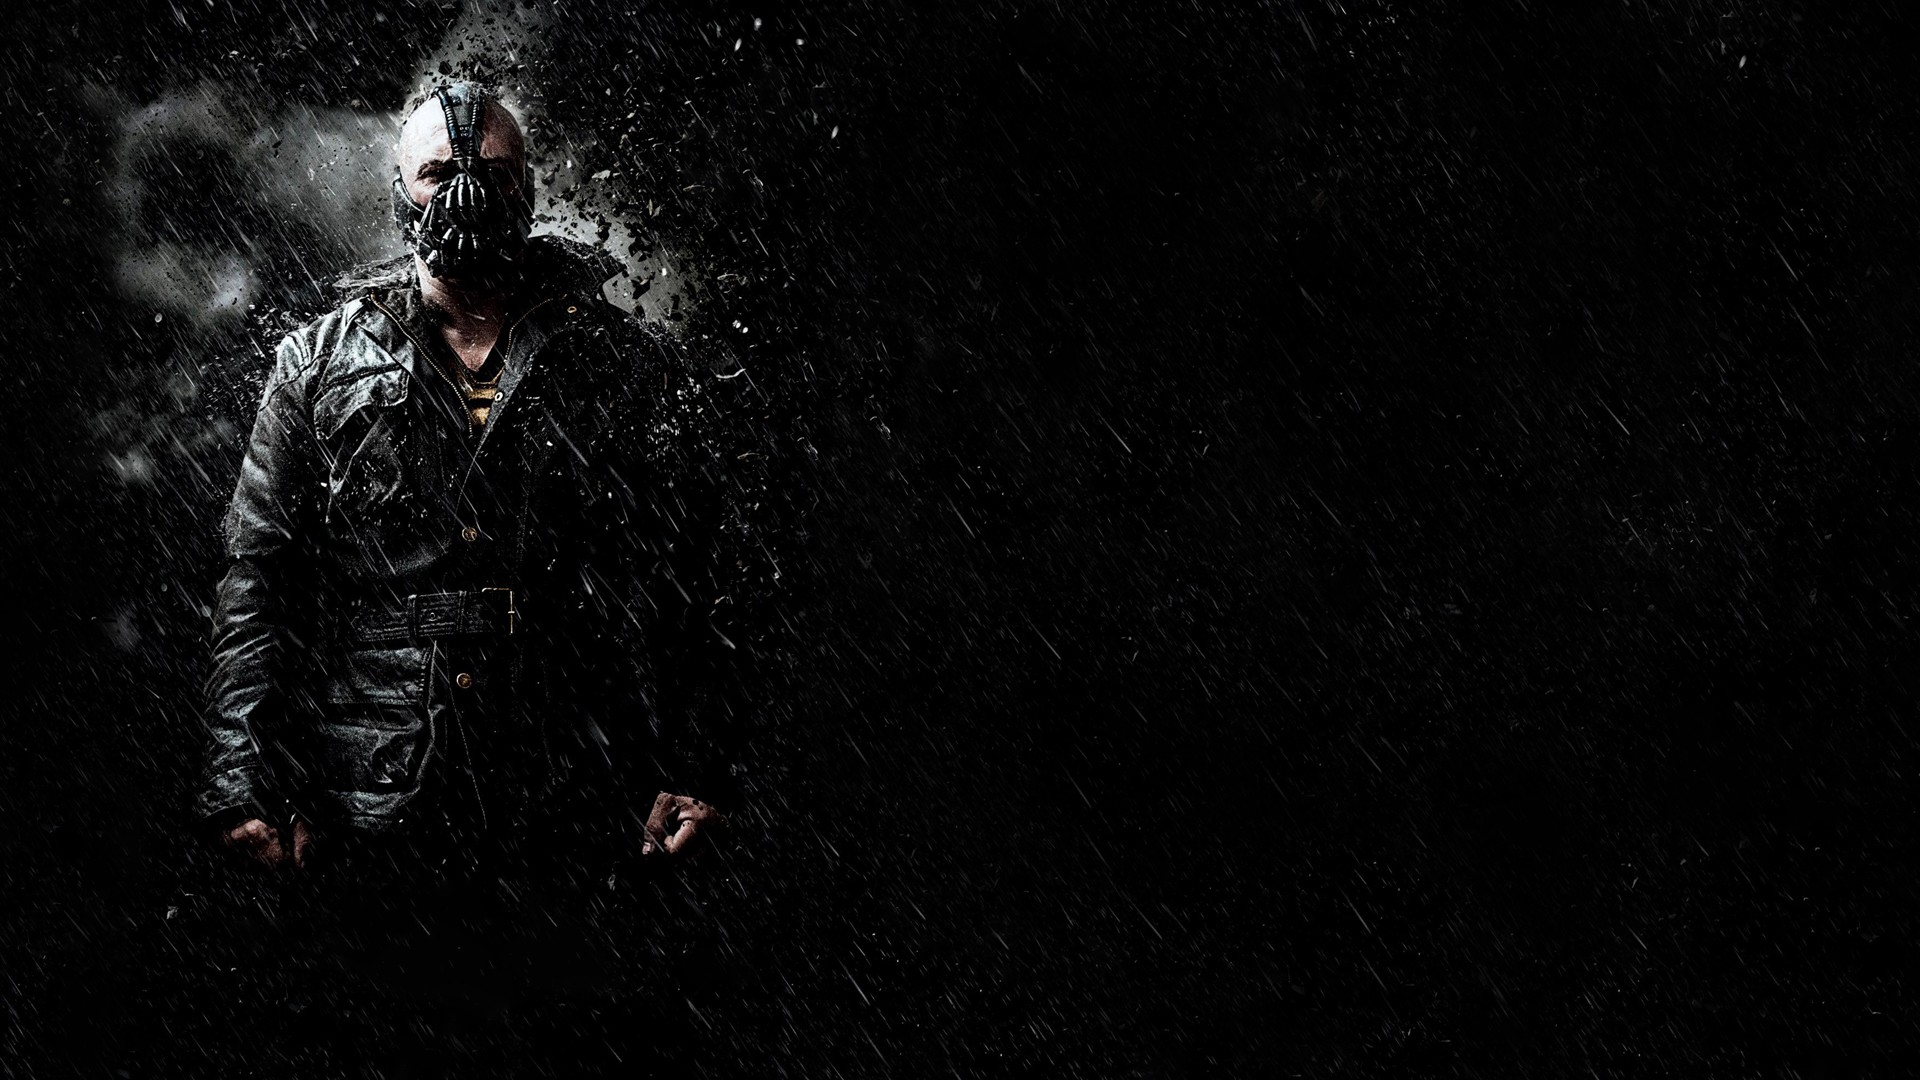 Dark Knight Rises Batman Superhero Bane E Wallpapers Hd Desktop And Mobile Backgrounds